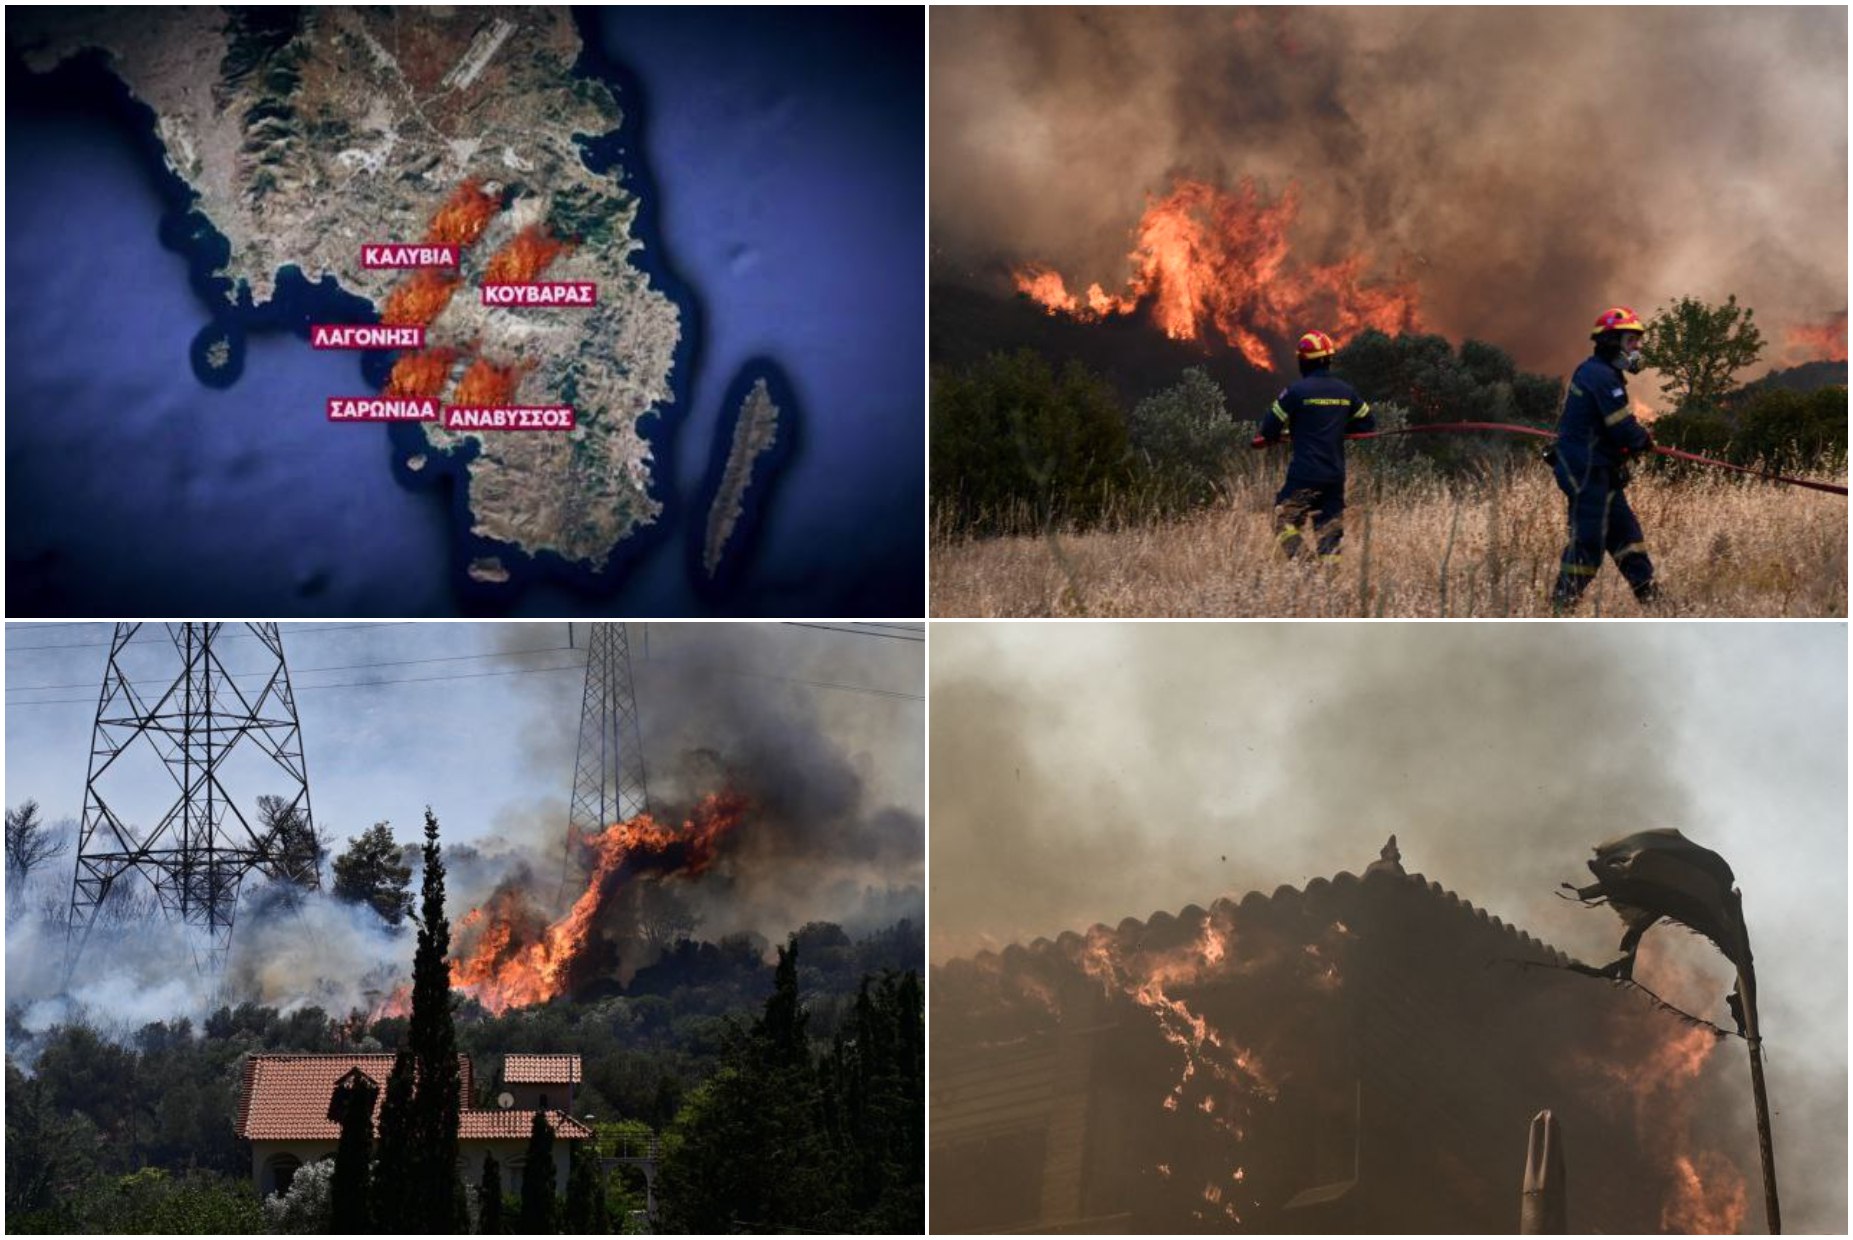 First major wildfire of the season SE of Athens proper, near coastal resorts